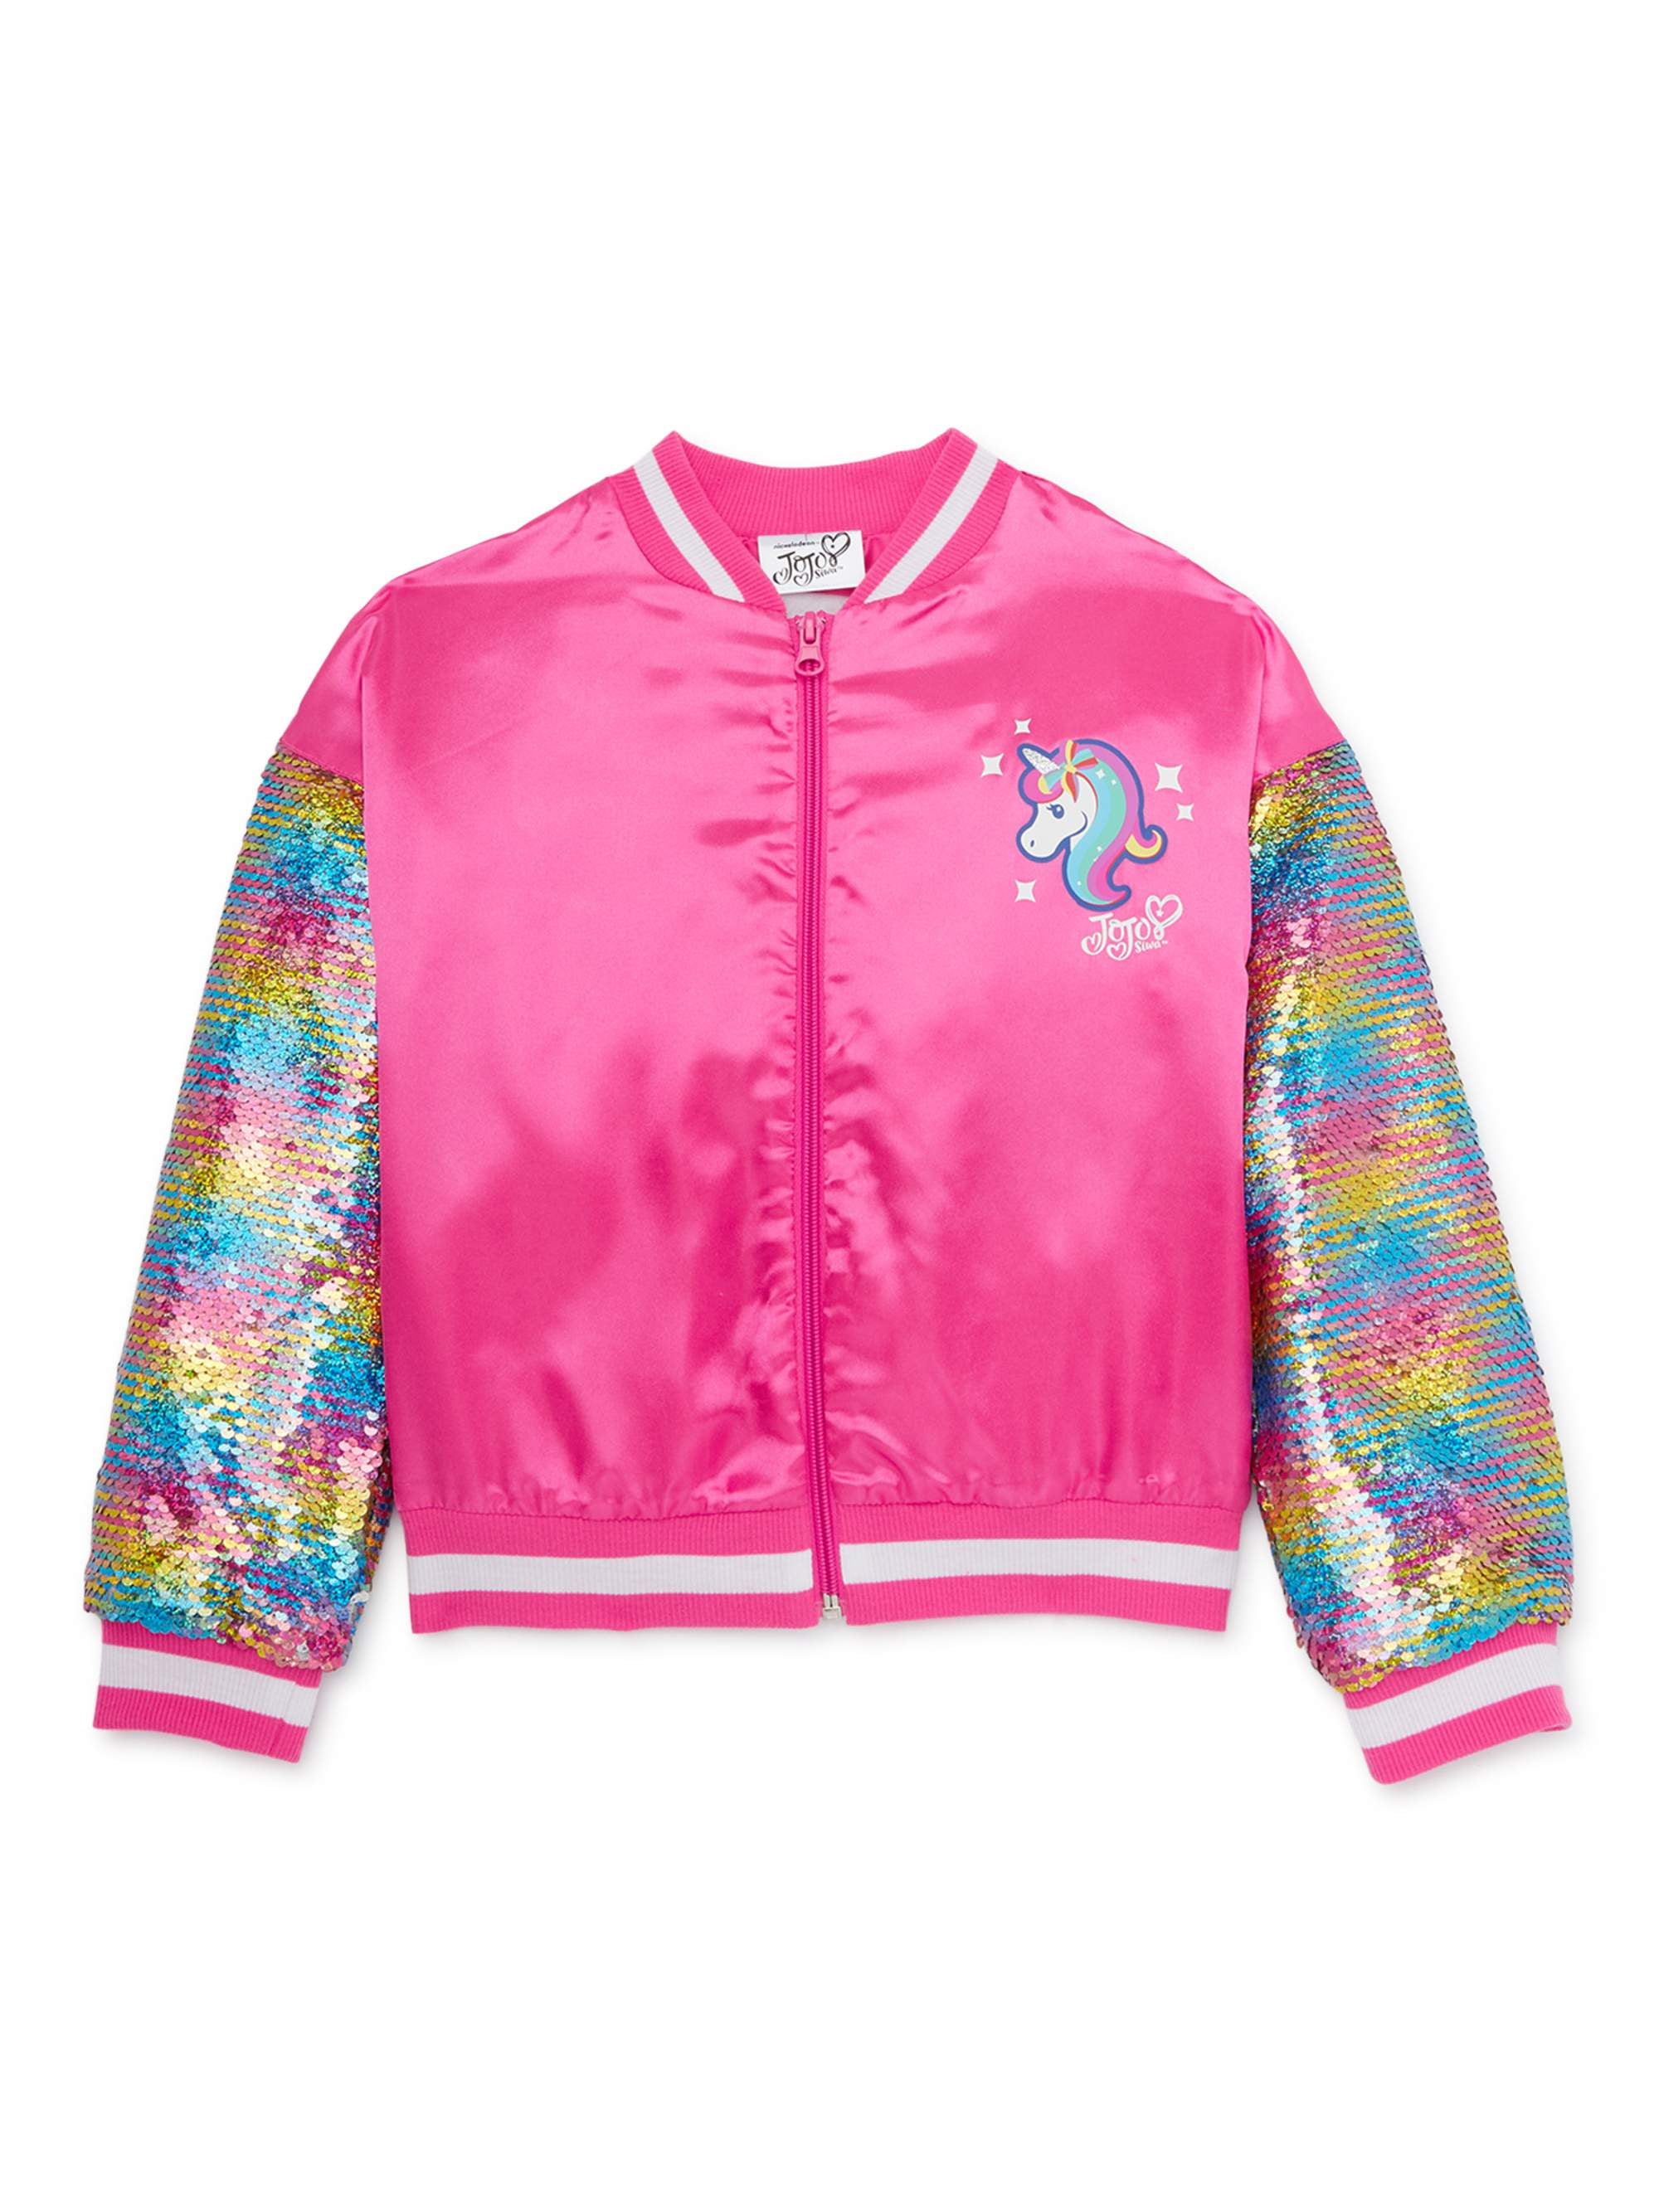 Jojo Siwa Girls 4-16 Bomber Jacket with Flip Sequin Sleeves - Walmart.com